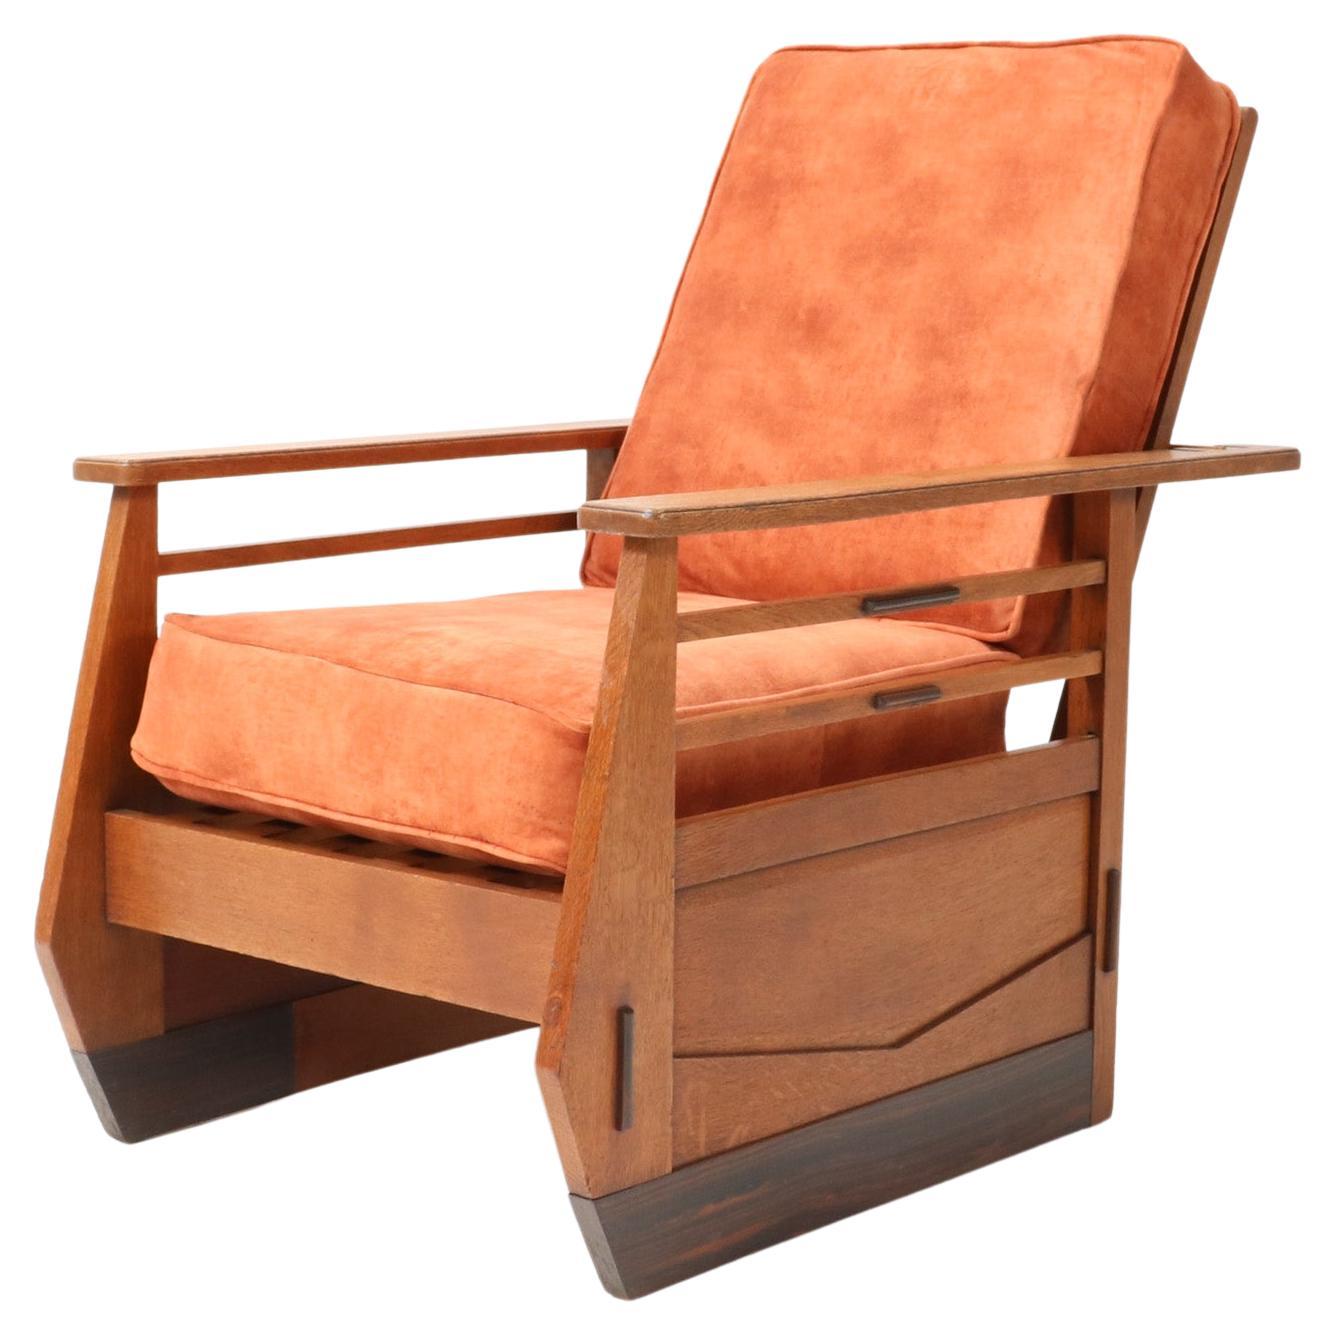 Oak Art Deco Amsterdamse School Lounge Chair or Folding Chair, 1920s For Sale